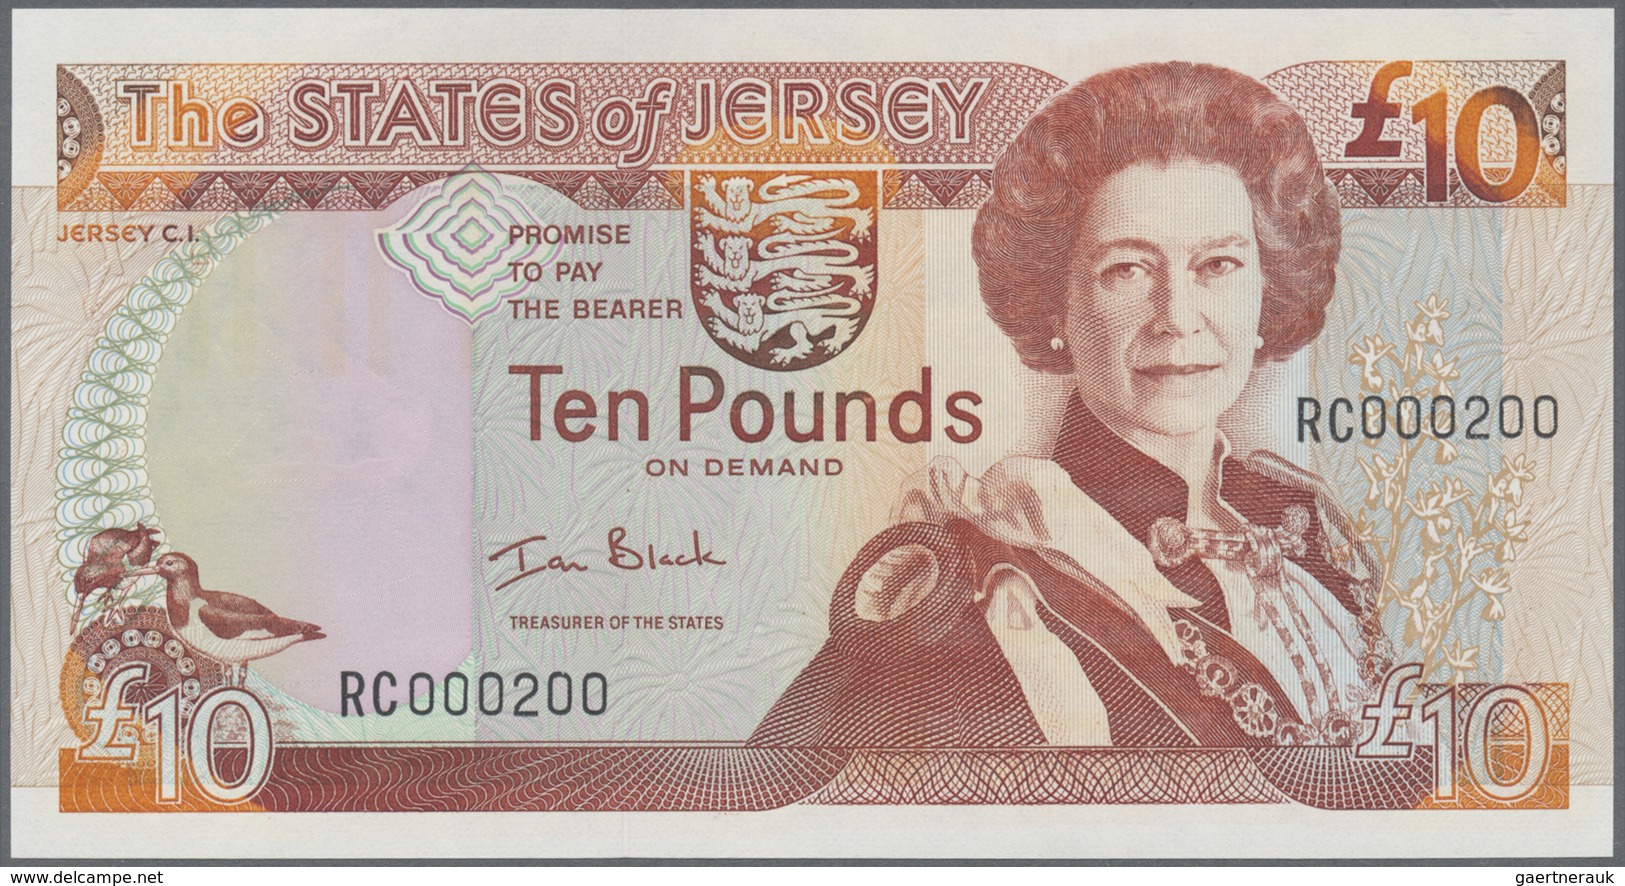 Jersey: Set with 5 Banknotes series  1976 – 2000 1 Pound x2 LJ 280347, XC 000200, 10 Pounds AB 00015